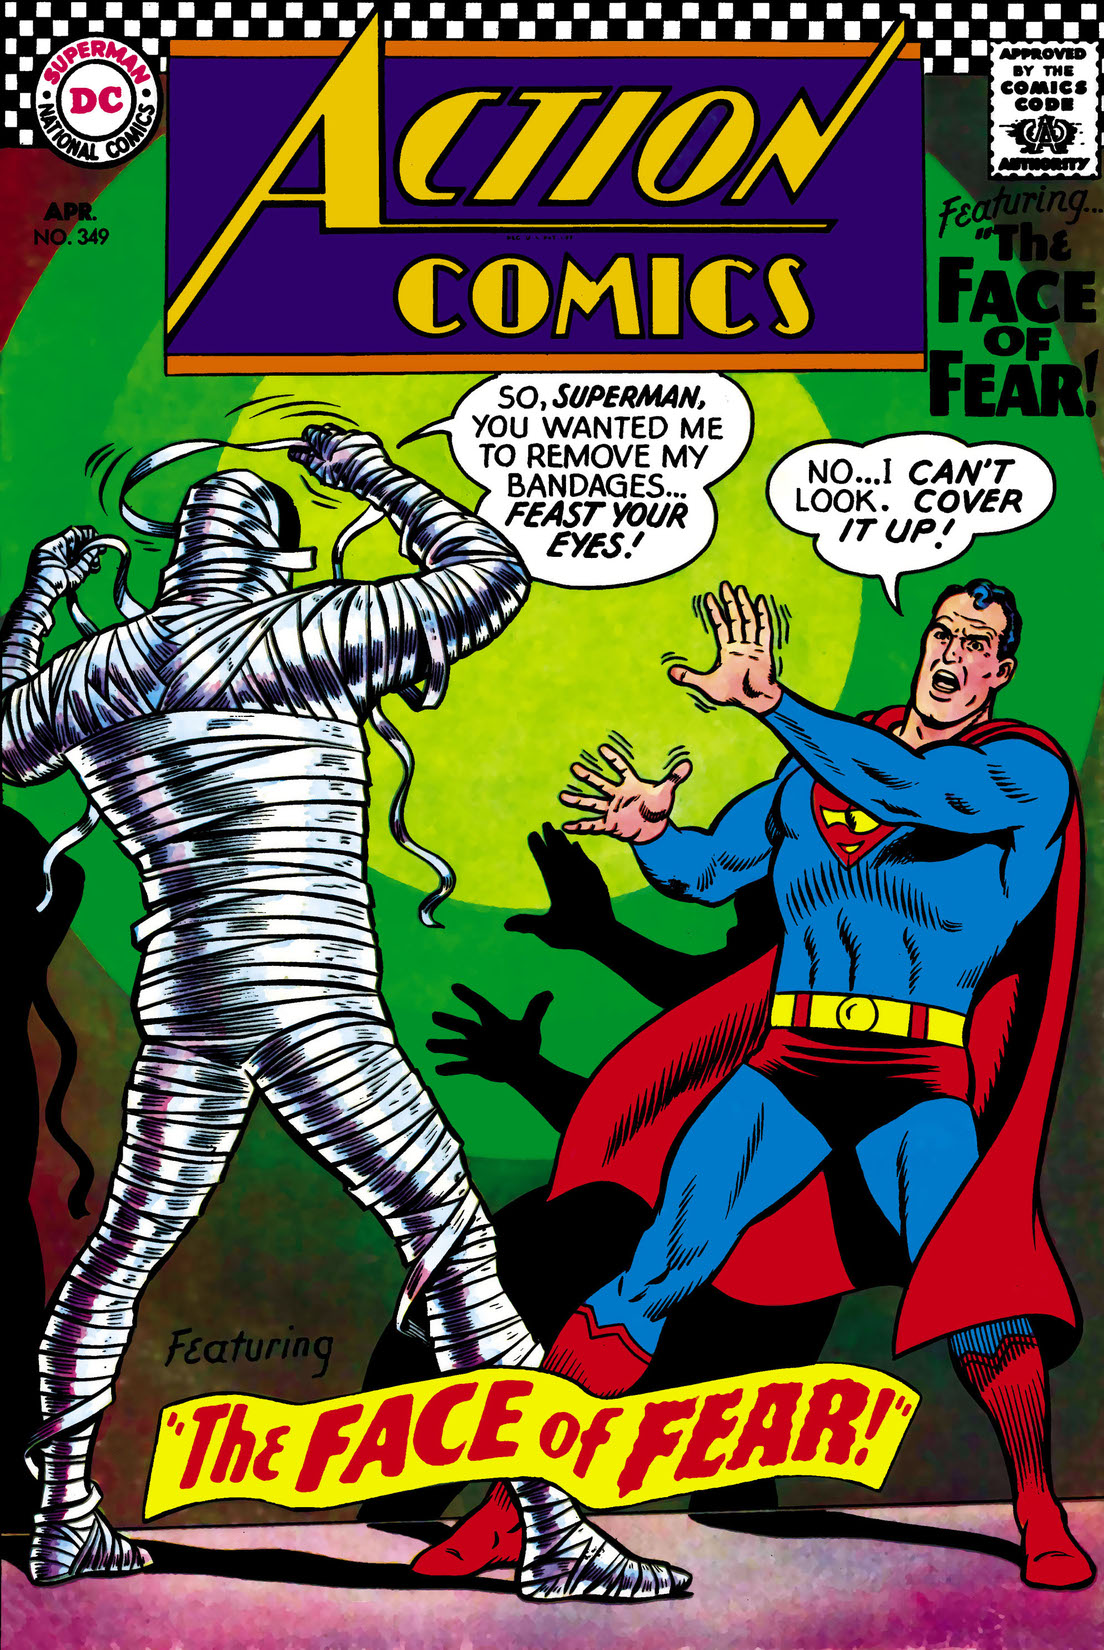 Action Comics (1938-) #349 preview images